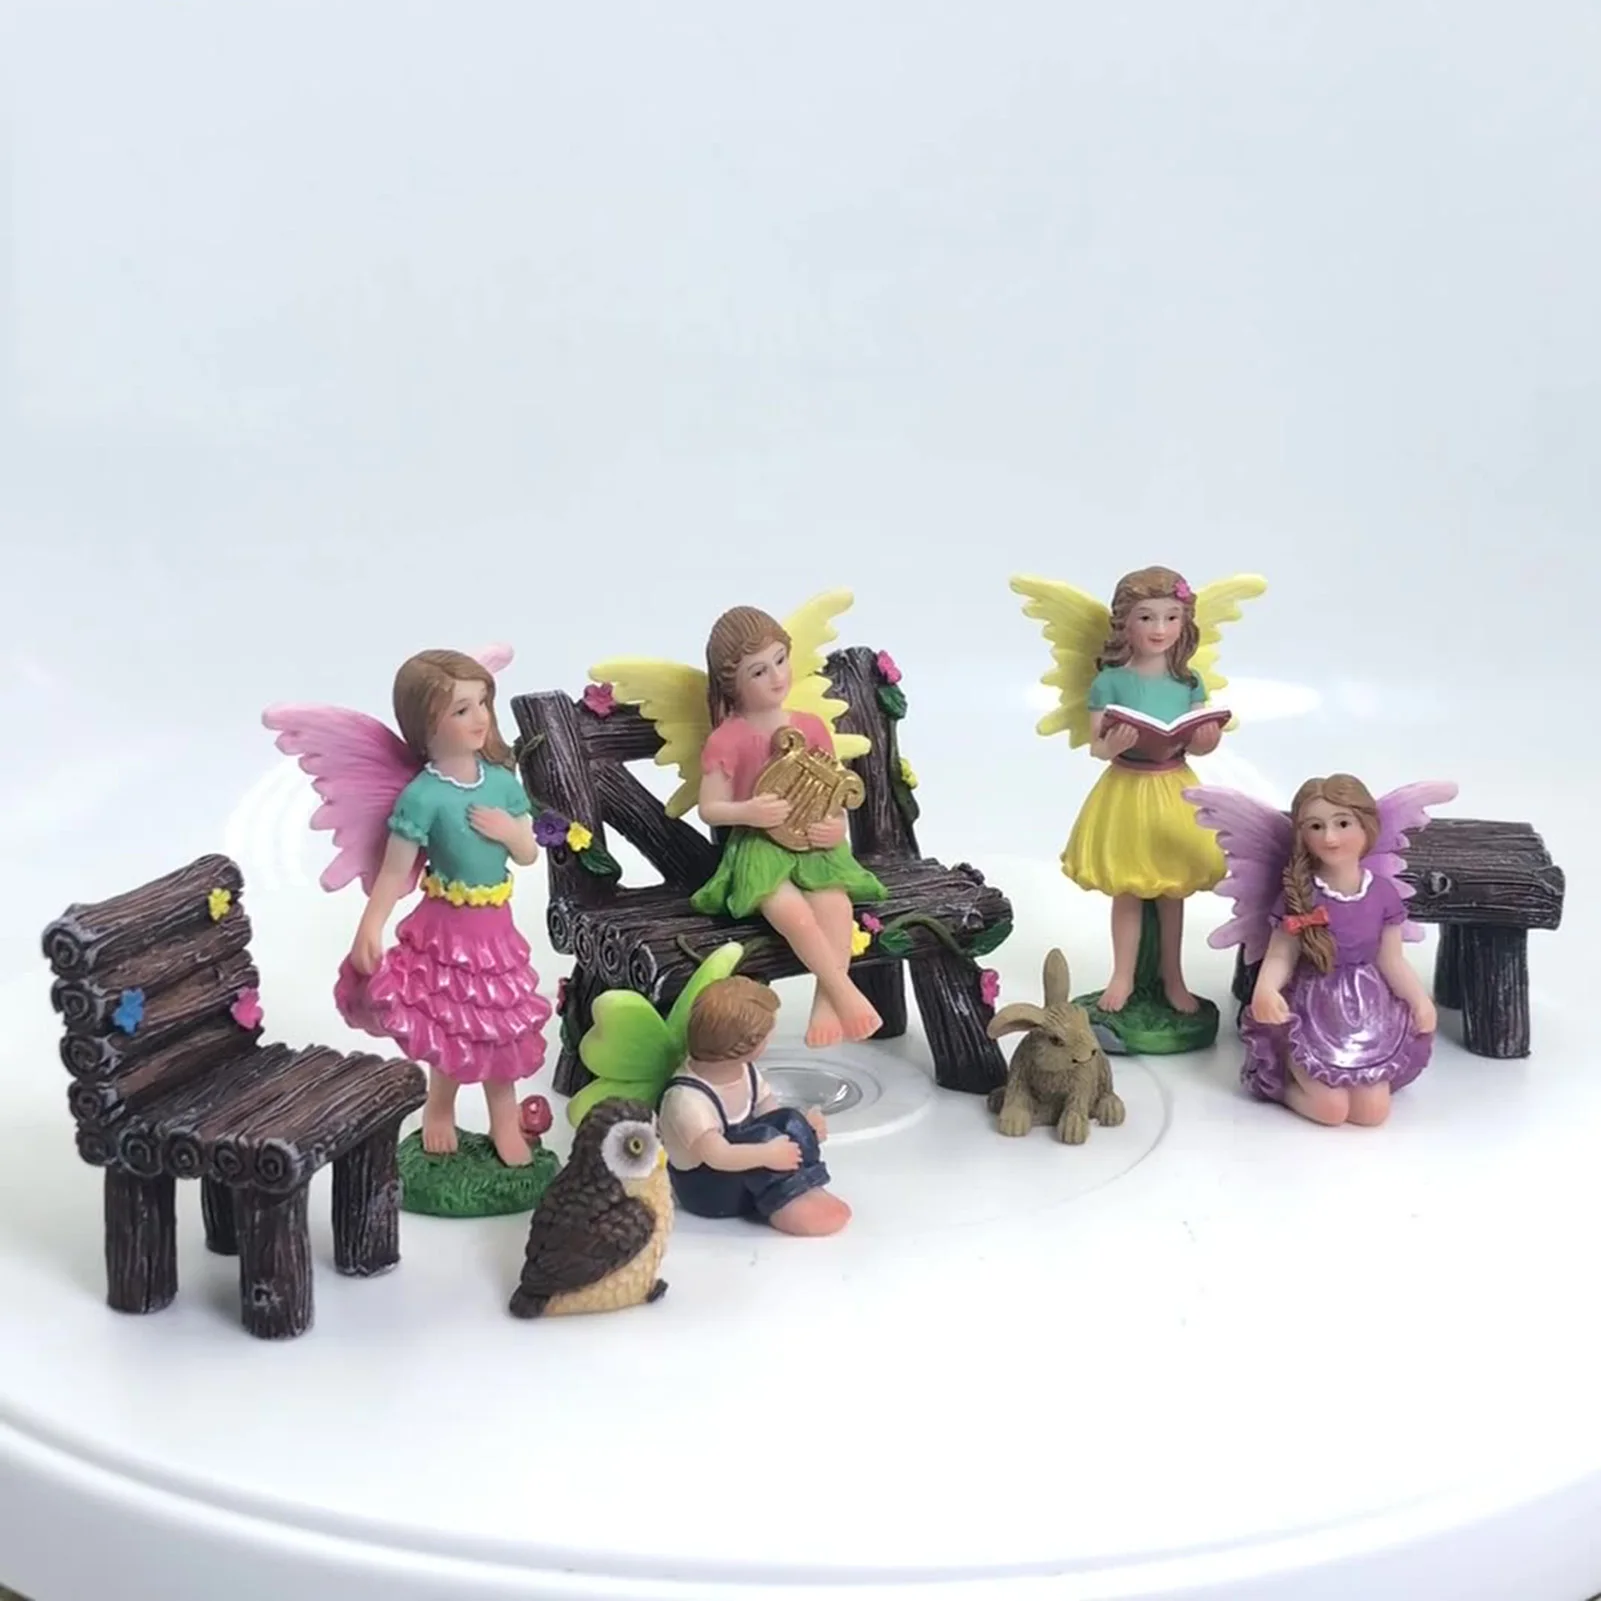 

Miniature Fairies Figurines Miniature Figurines & Accessories Starter Kit Fairy Garden Set Of 10 Pcs Outdoor Or House Decor